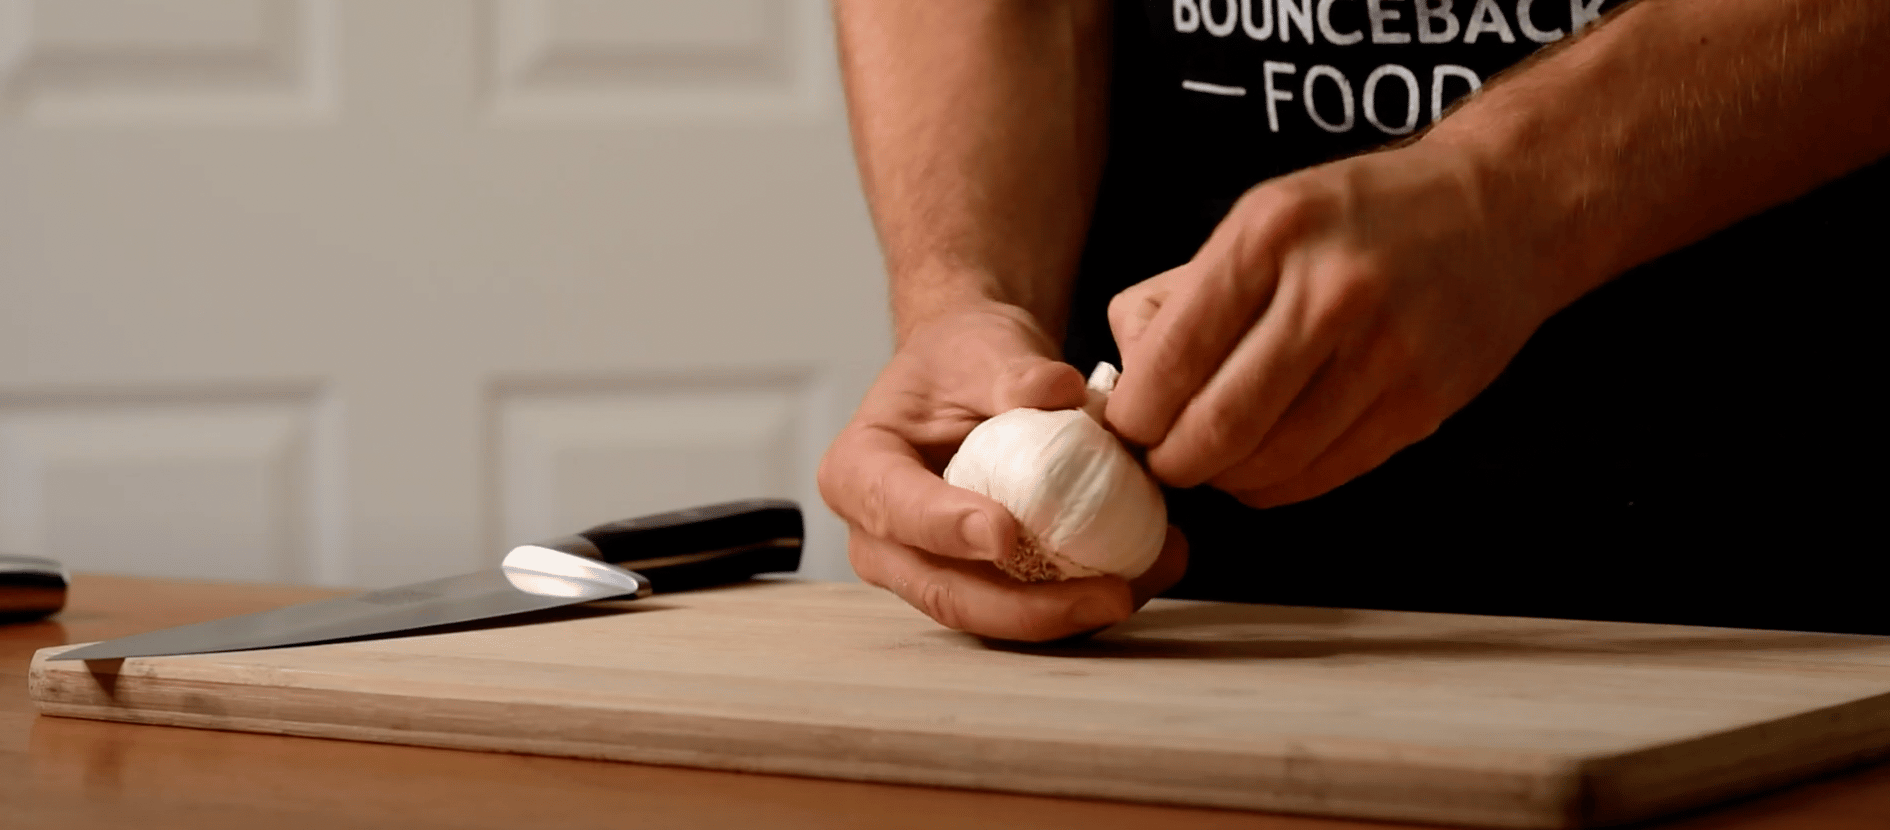 A man in a Bounceback apron is peeling a head of garlic, on a wooden chopping board.